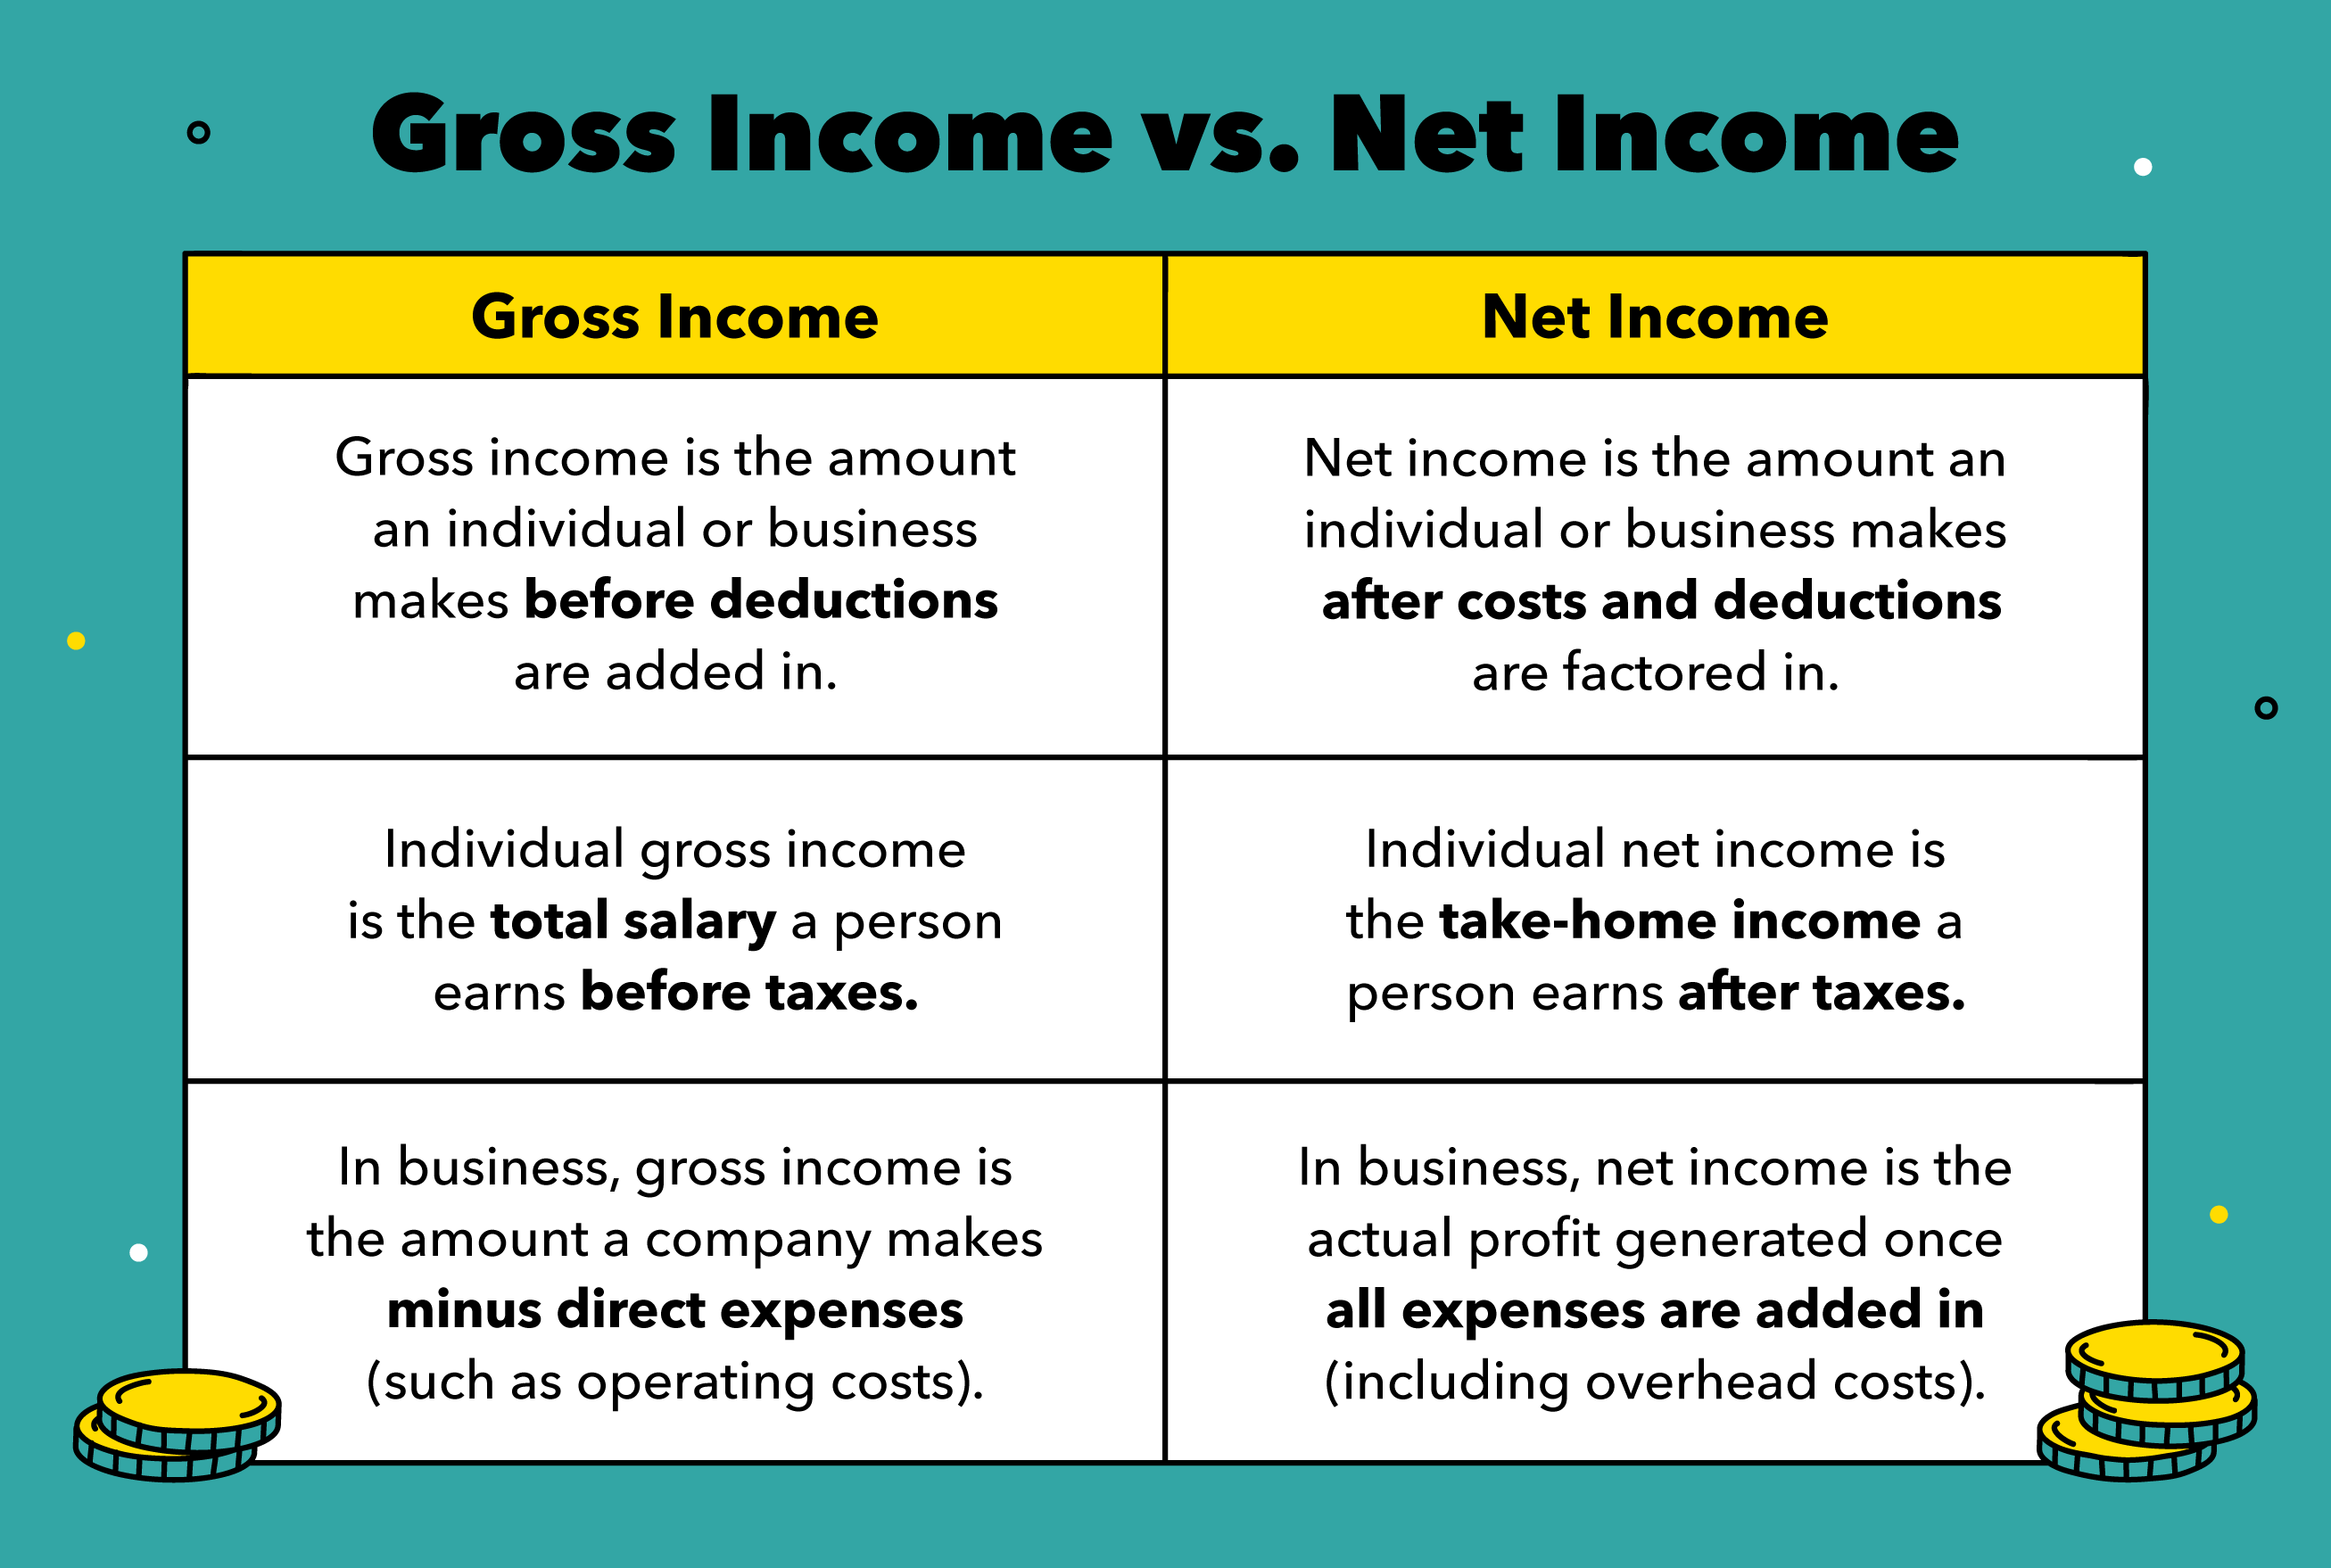 Gross income versus net income